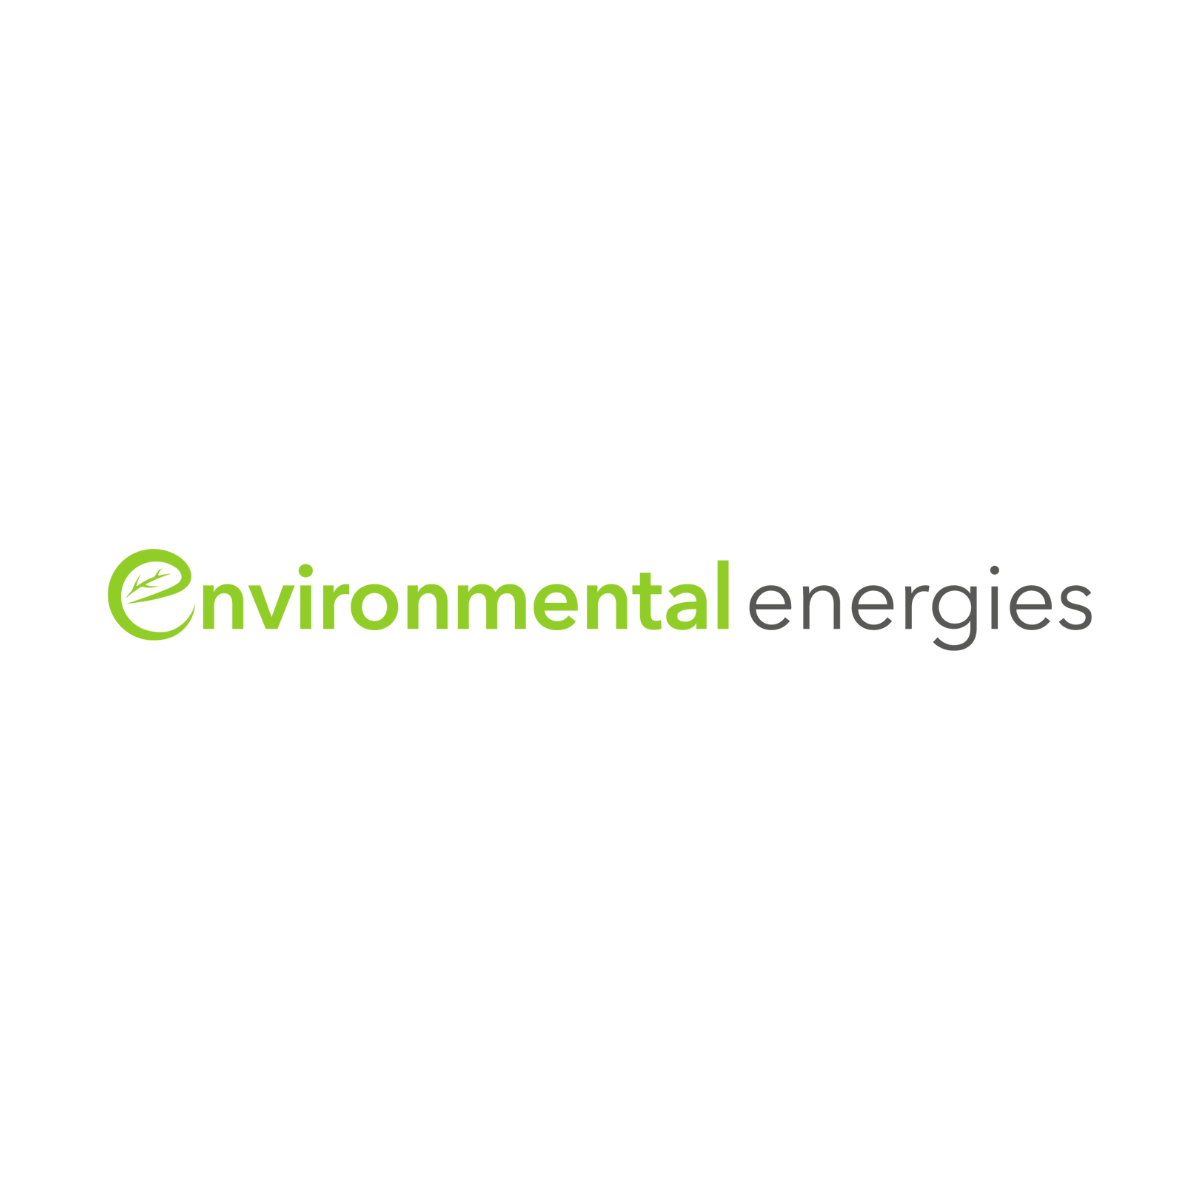 Environmental energies